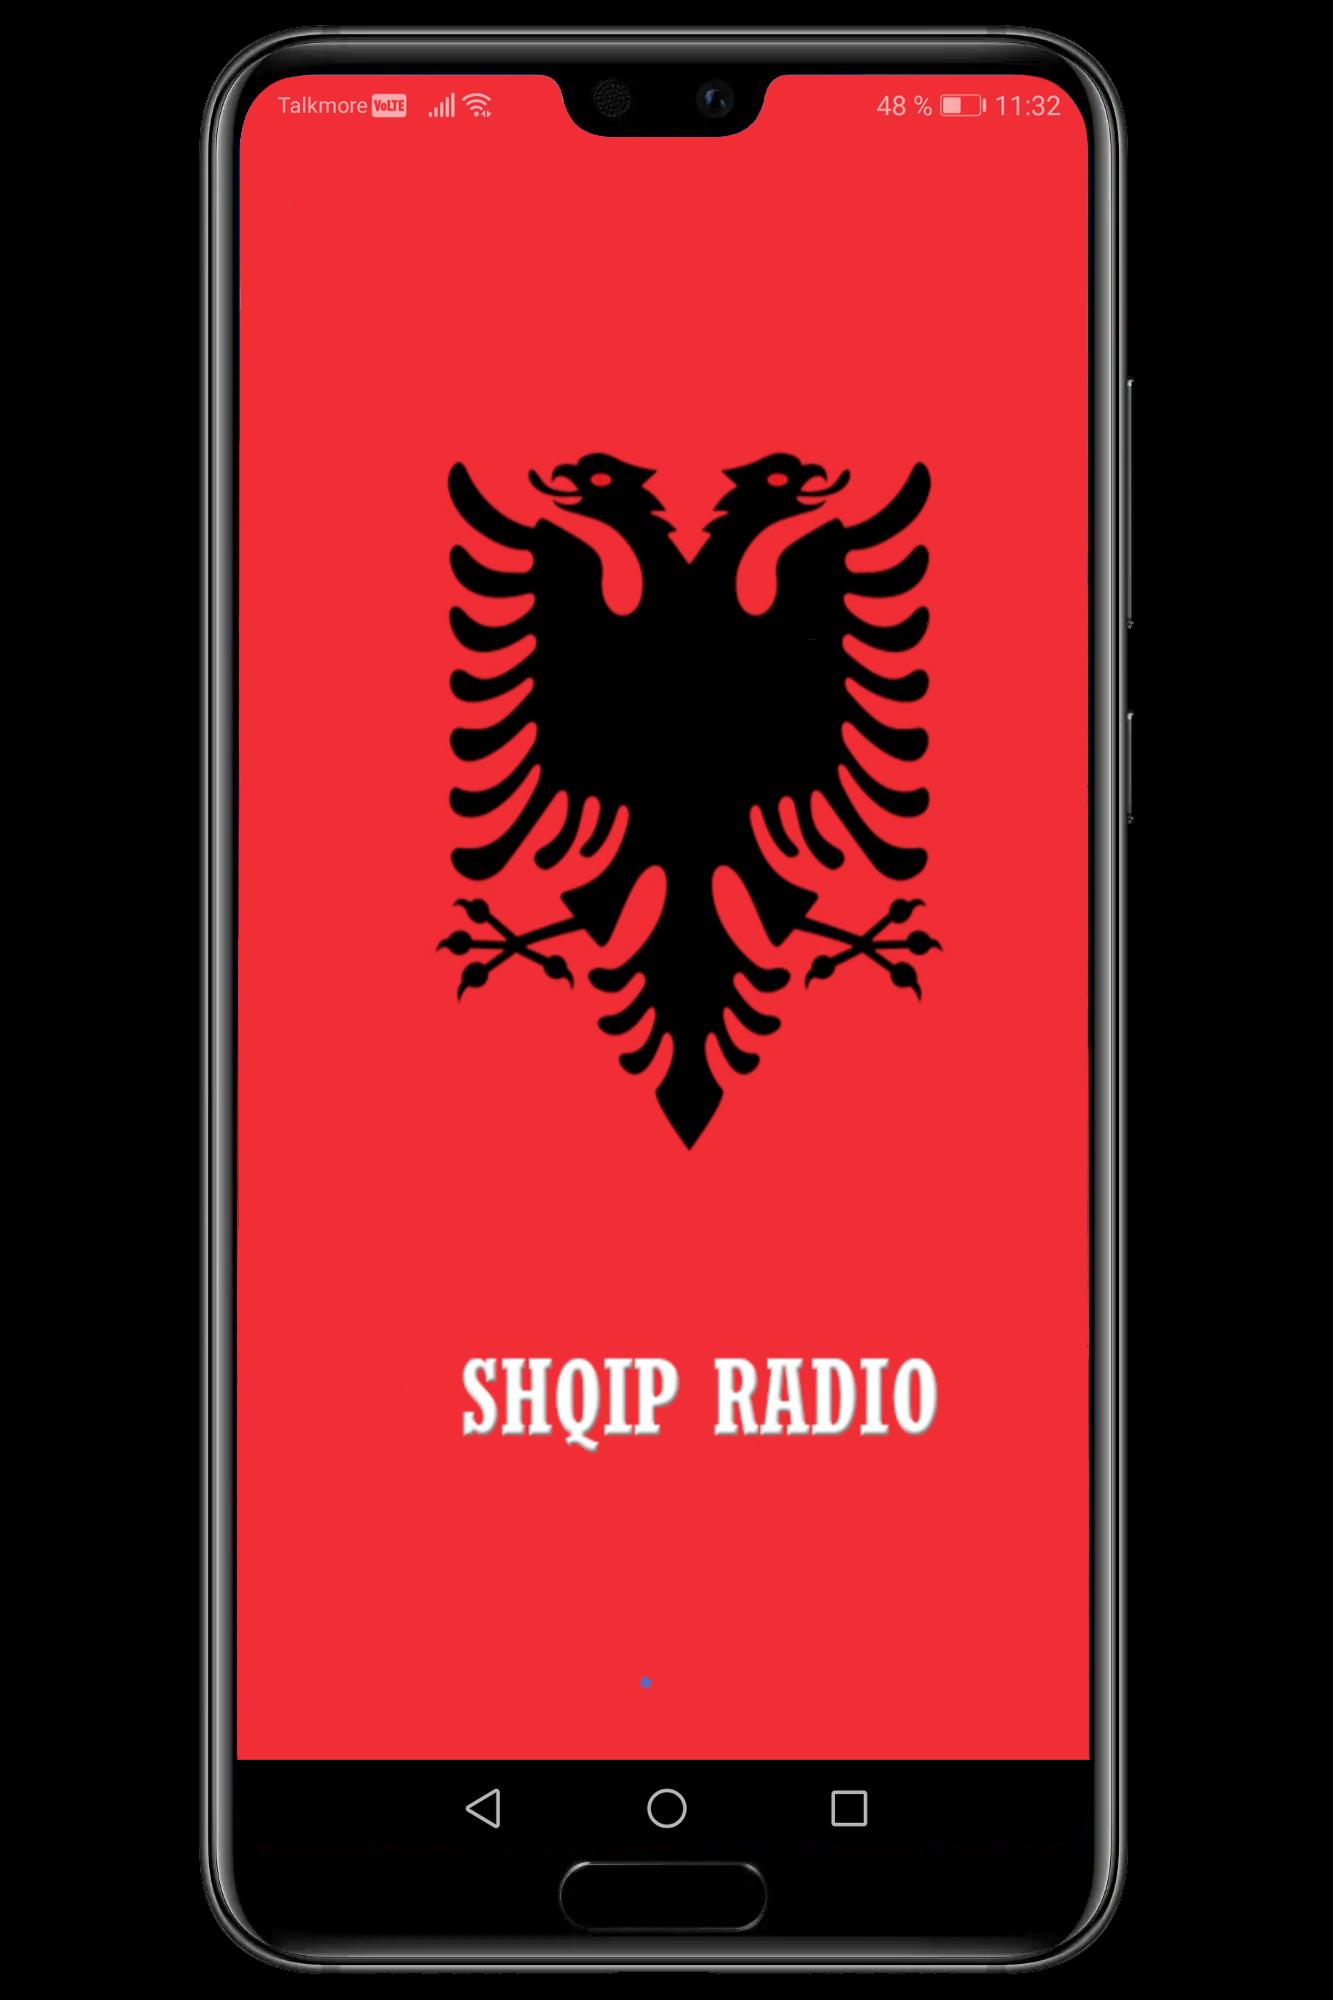 Albanian radio - Shqip radio for Android - APK Download